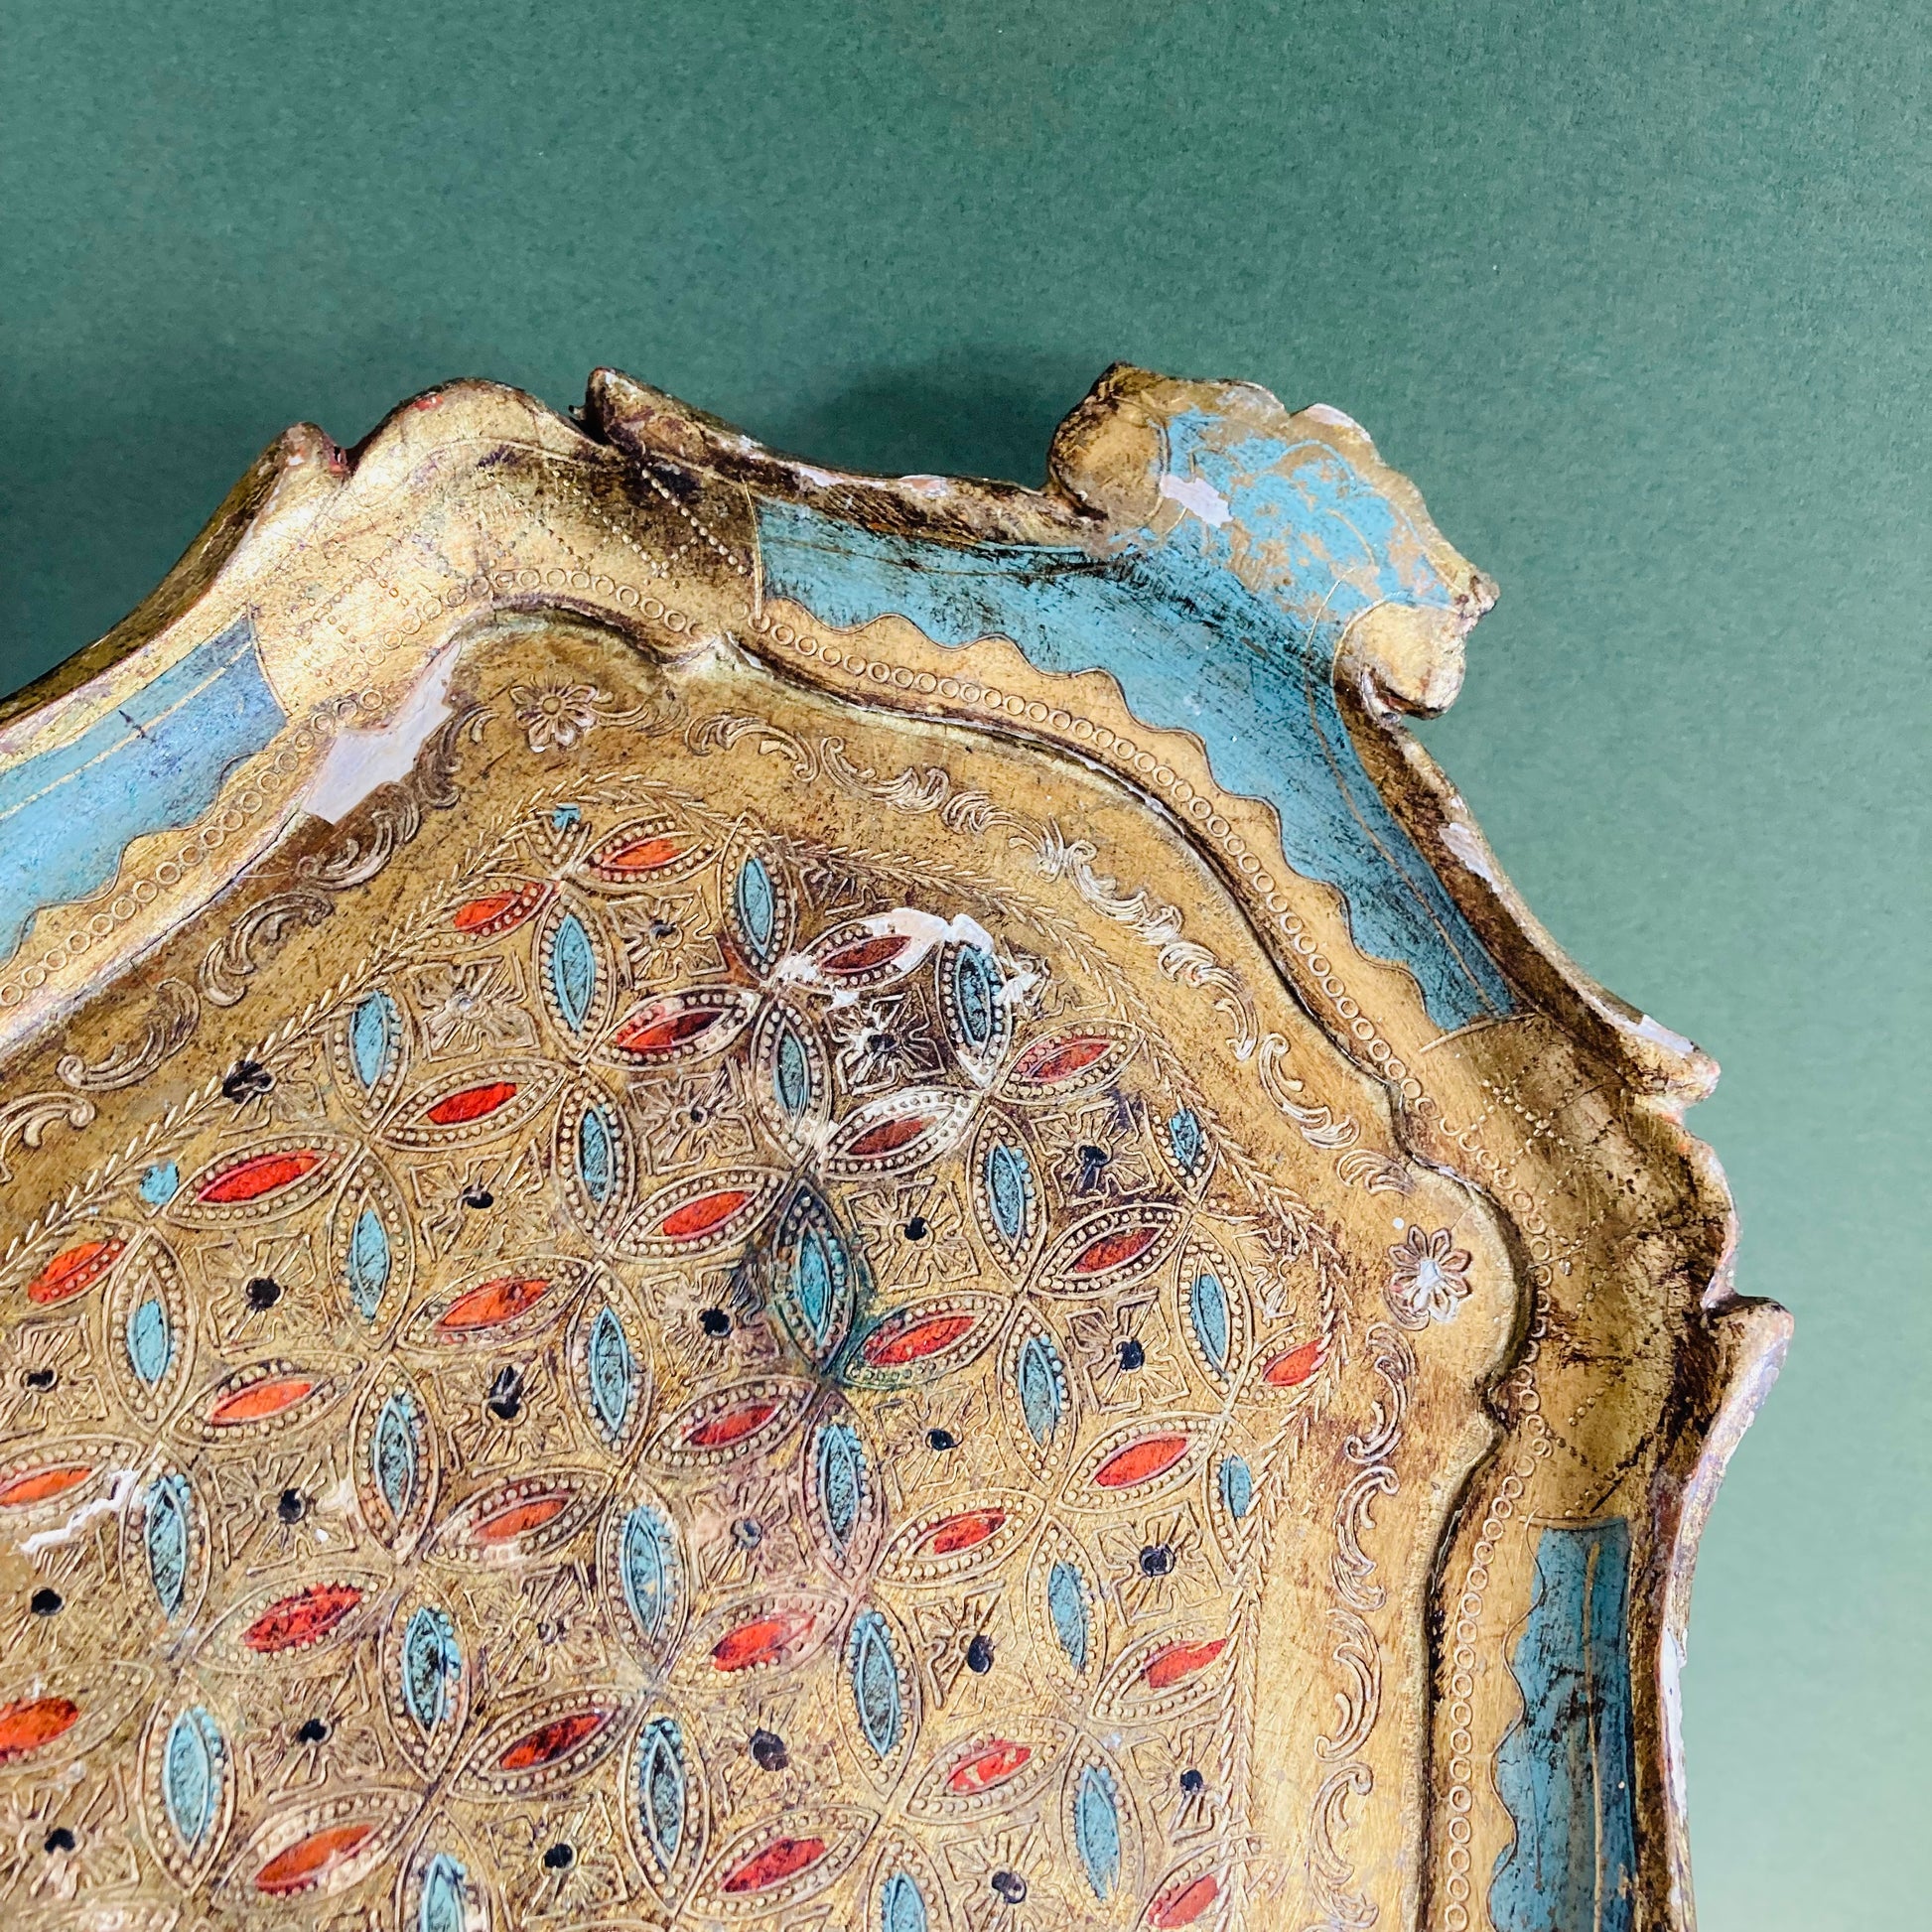  Antique Florentine Paper Mache Tray | The Urban Vintage Affair